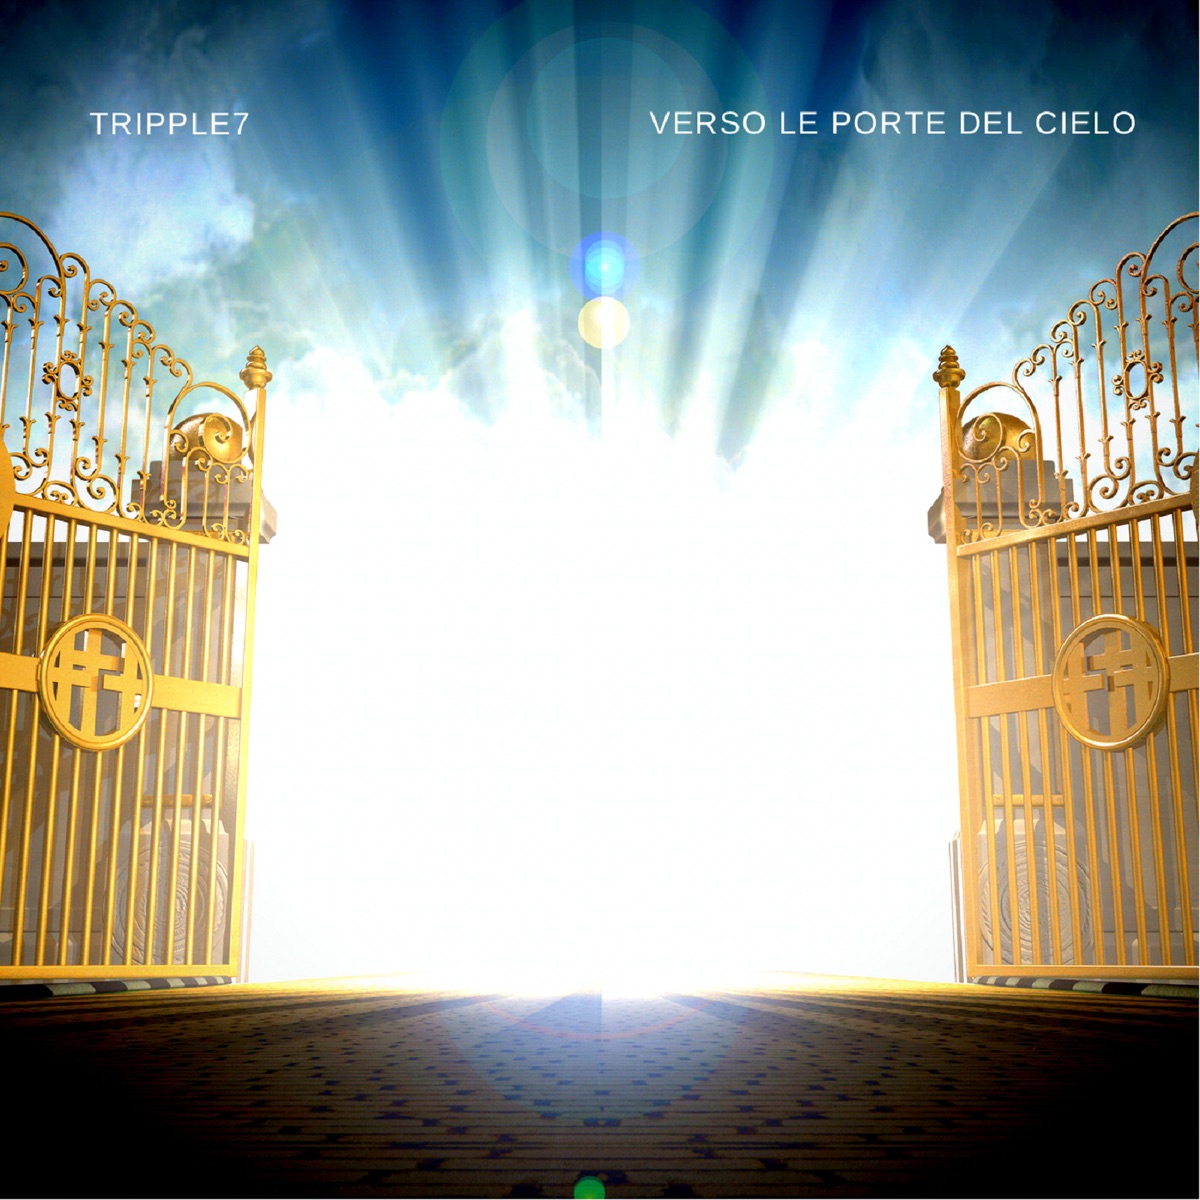 Verso le porte del cielo - Single by Tripple7 on Apple Music